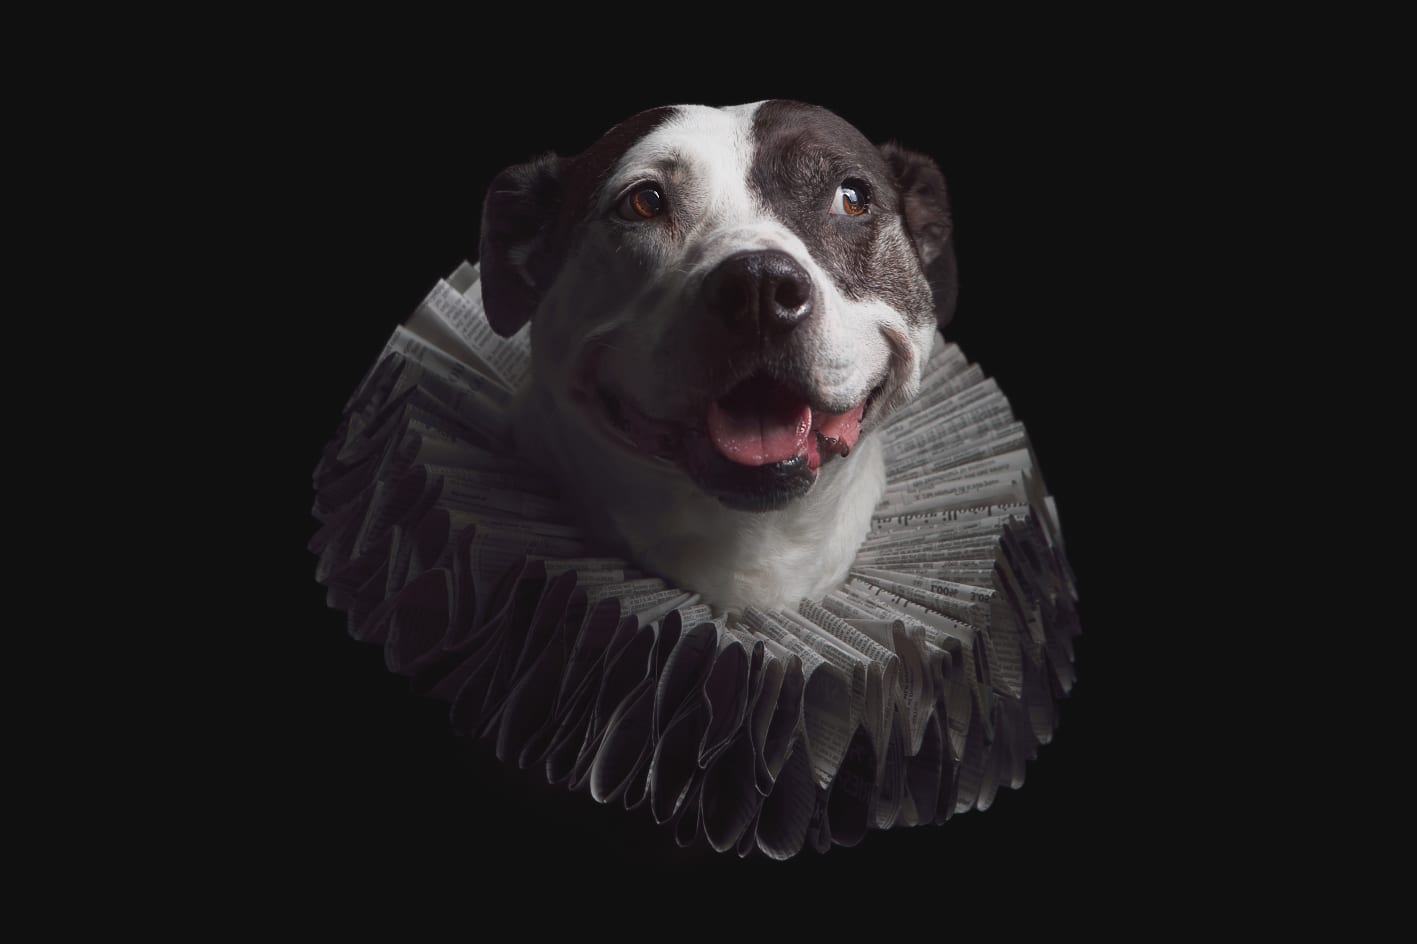 Dog photography portrait captured with a studio lighting setup.